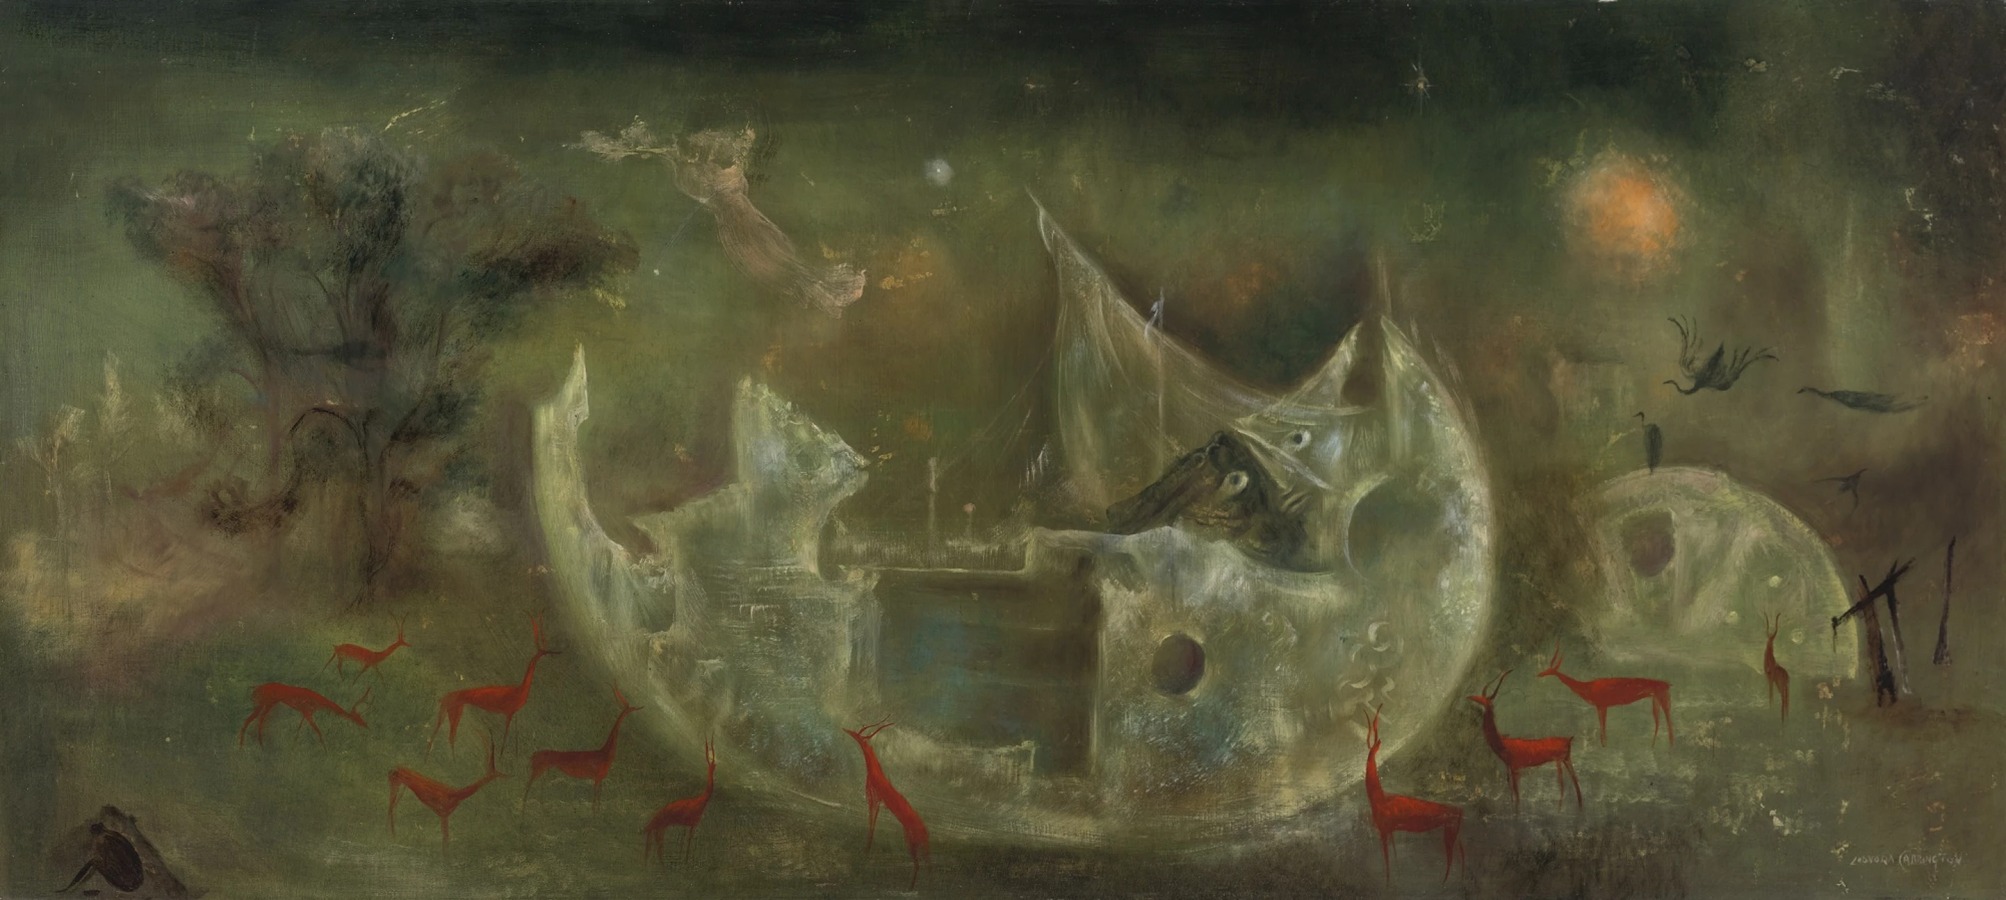 Arca de Noé by Leonora Carrington - Artvee